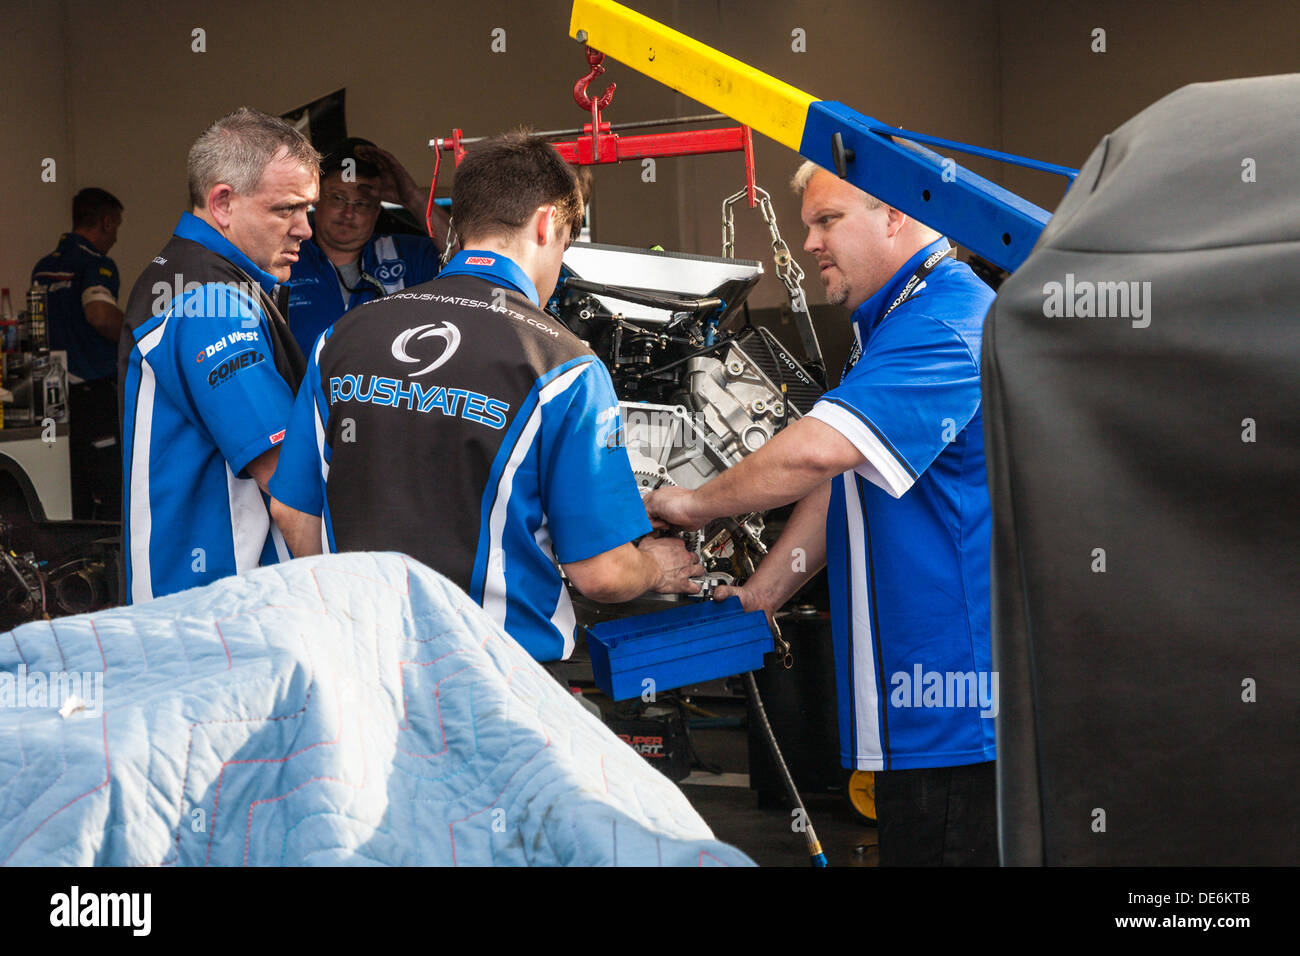 Roush Yates racing meccanica del motore motore preparare al Daytona International Speedway durante il 2012 Rolex 24 a Daytona, Florida Foto Stock